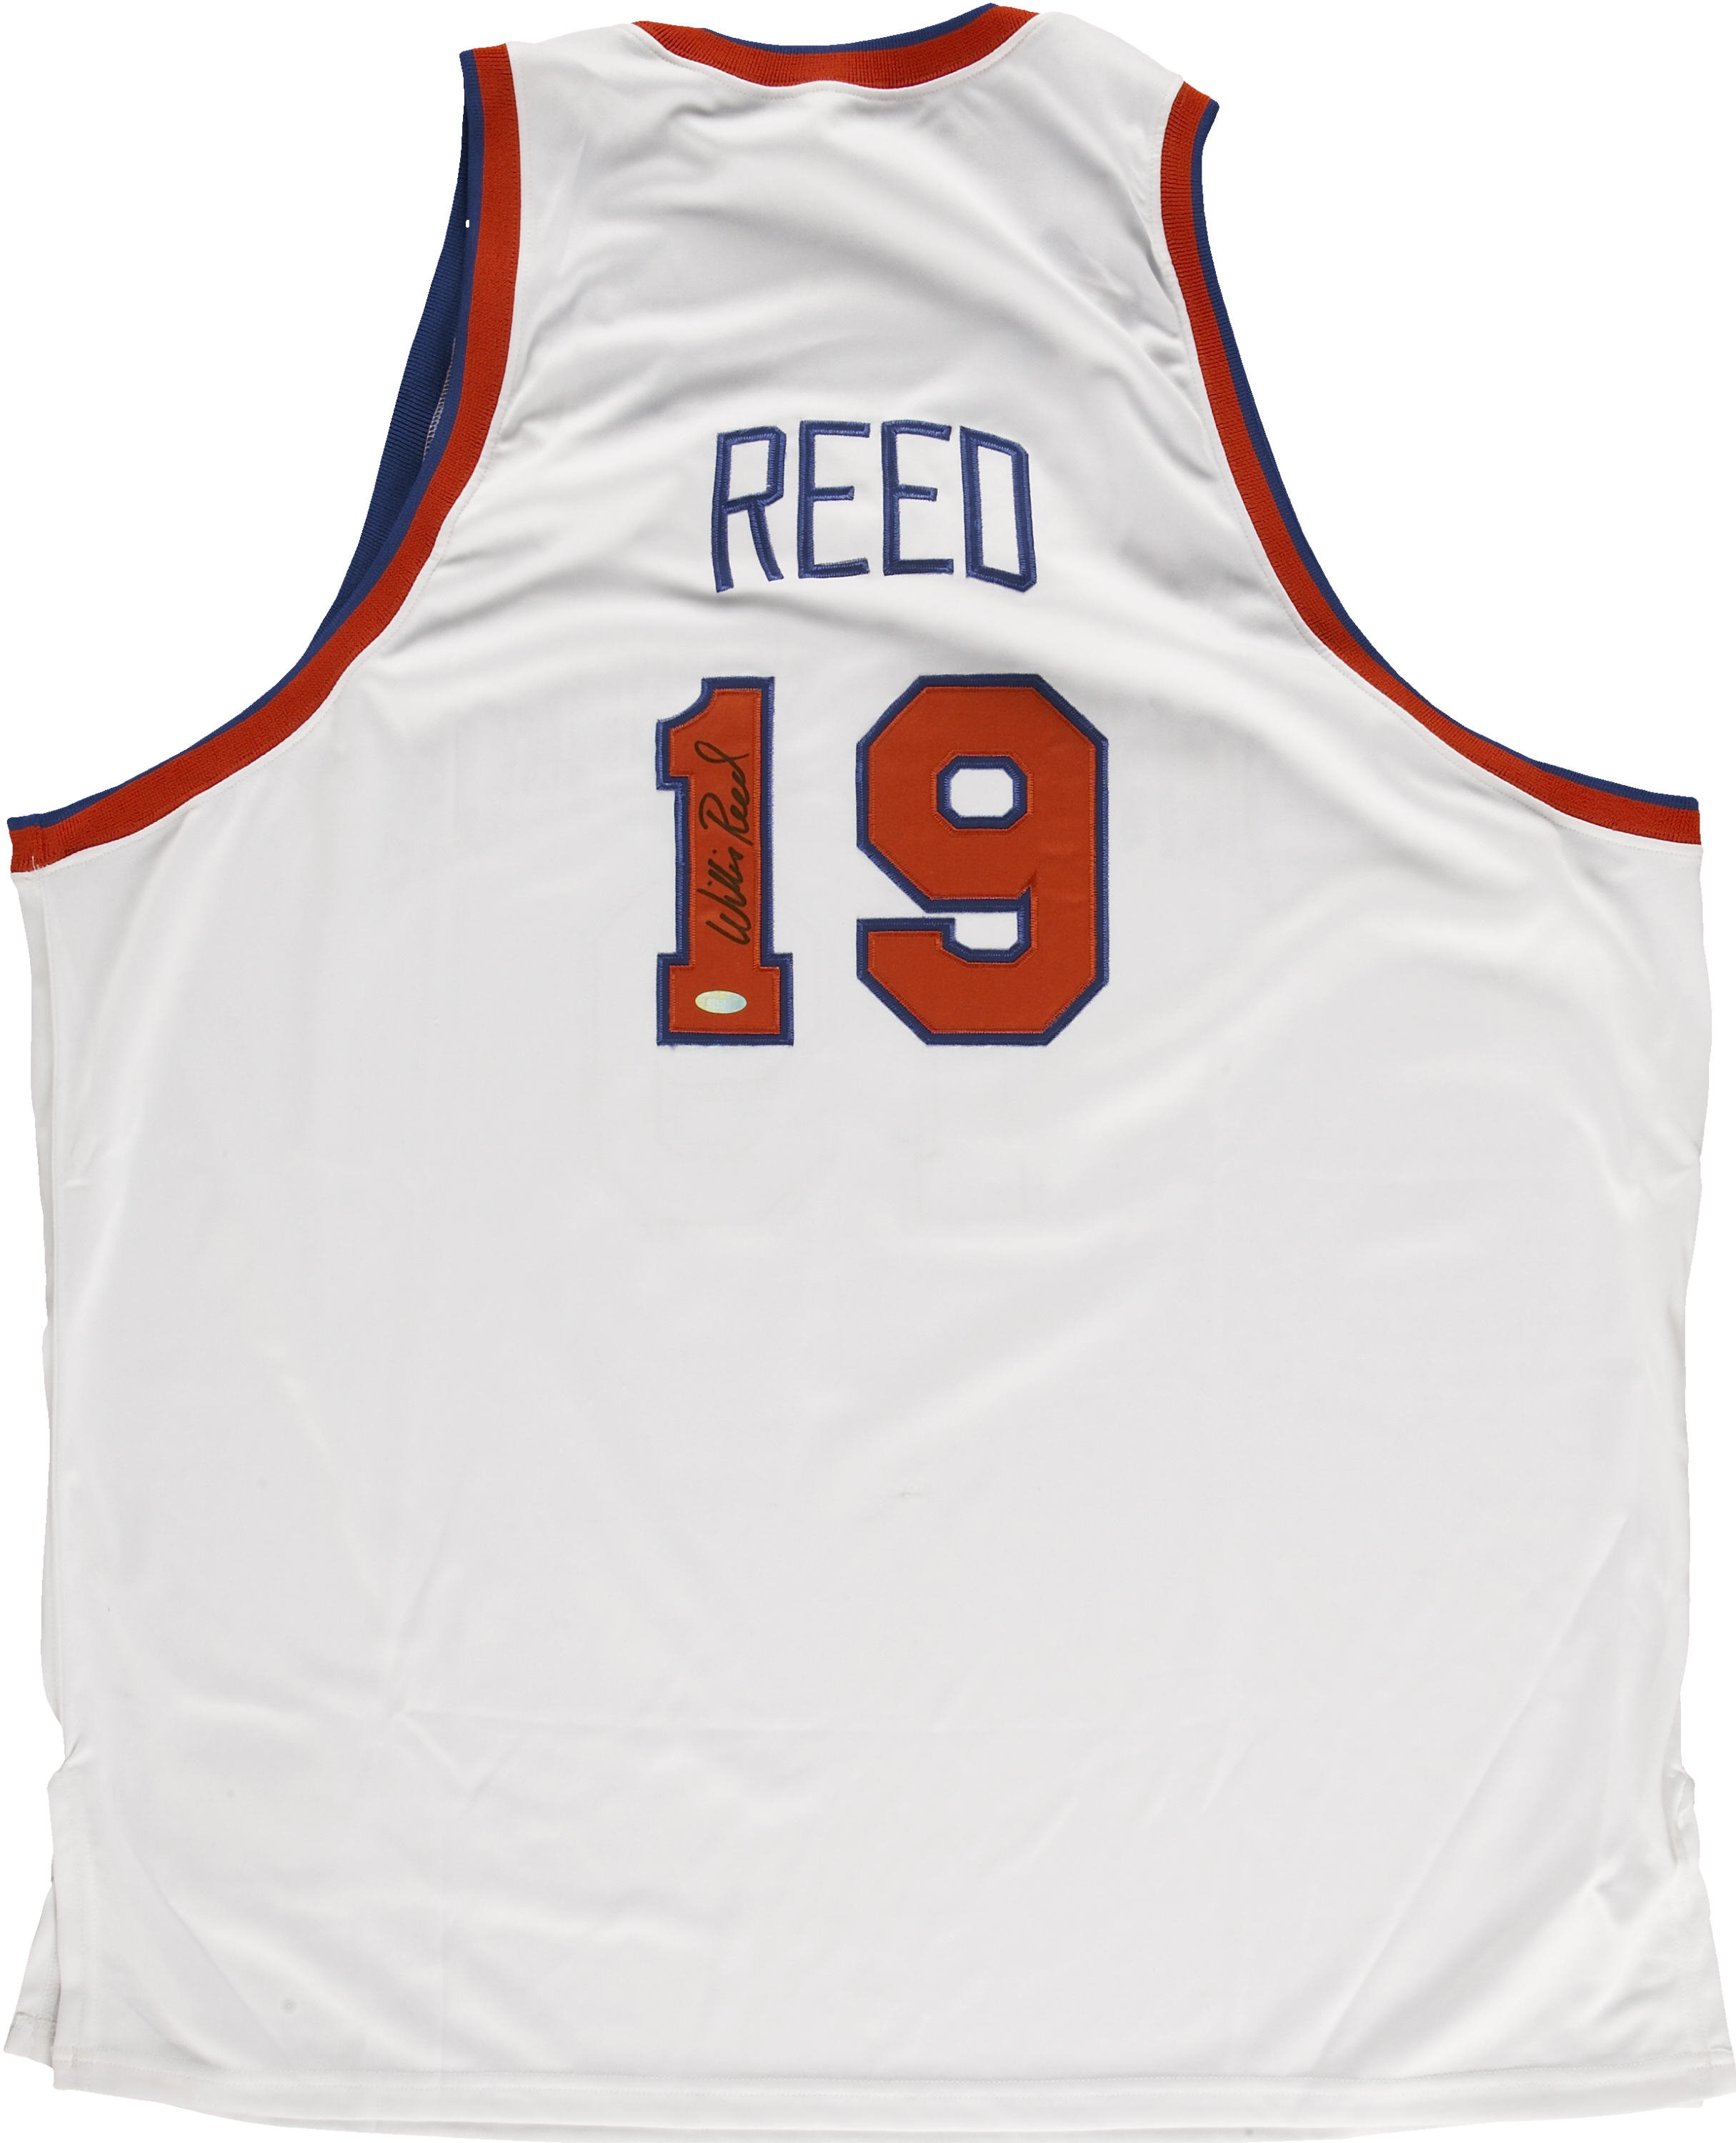 Willis Reed New York Knicks jersey: Where to buy legendary